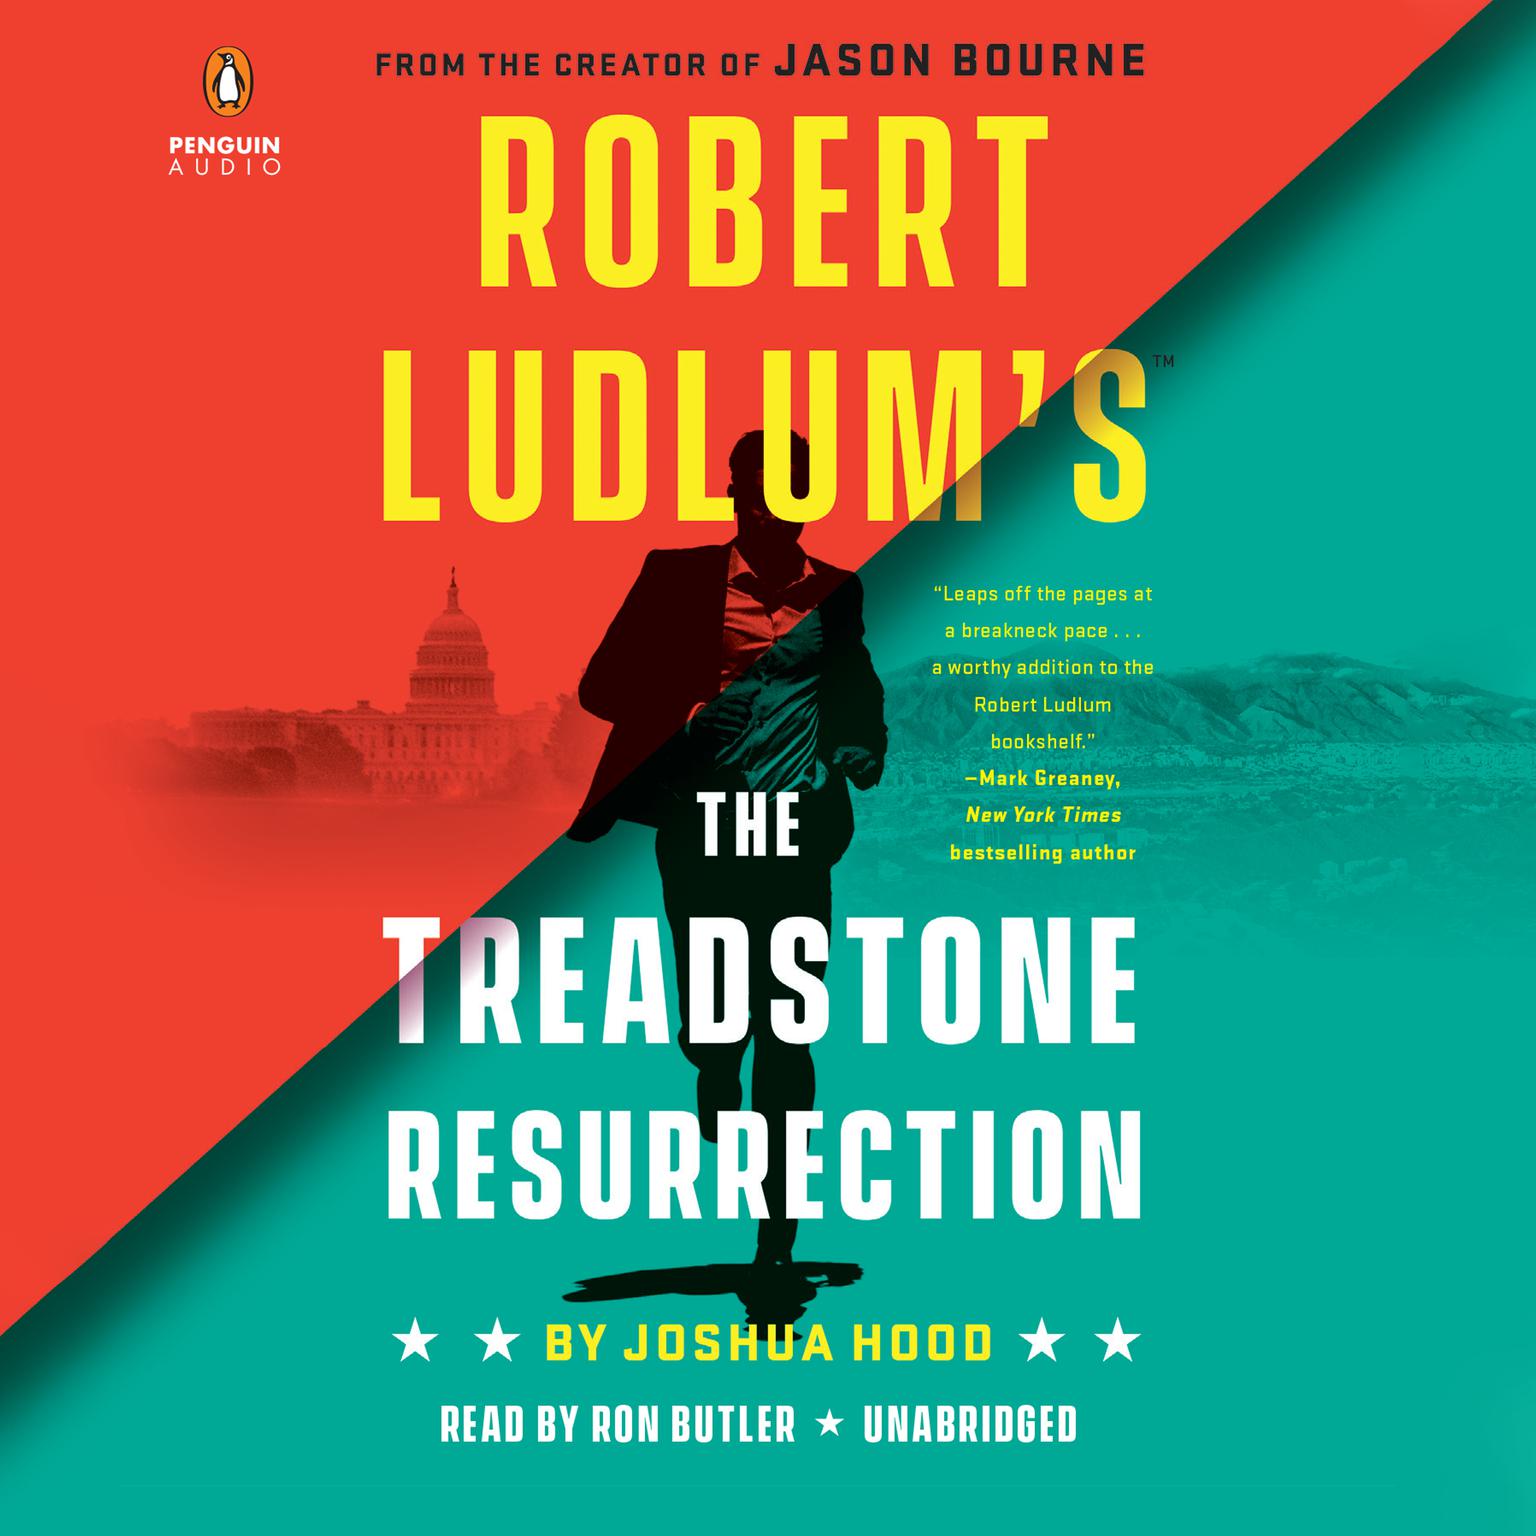 Robert Ludlums The Treadstone Resurrection Audiobook, by Joshua Hood